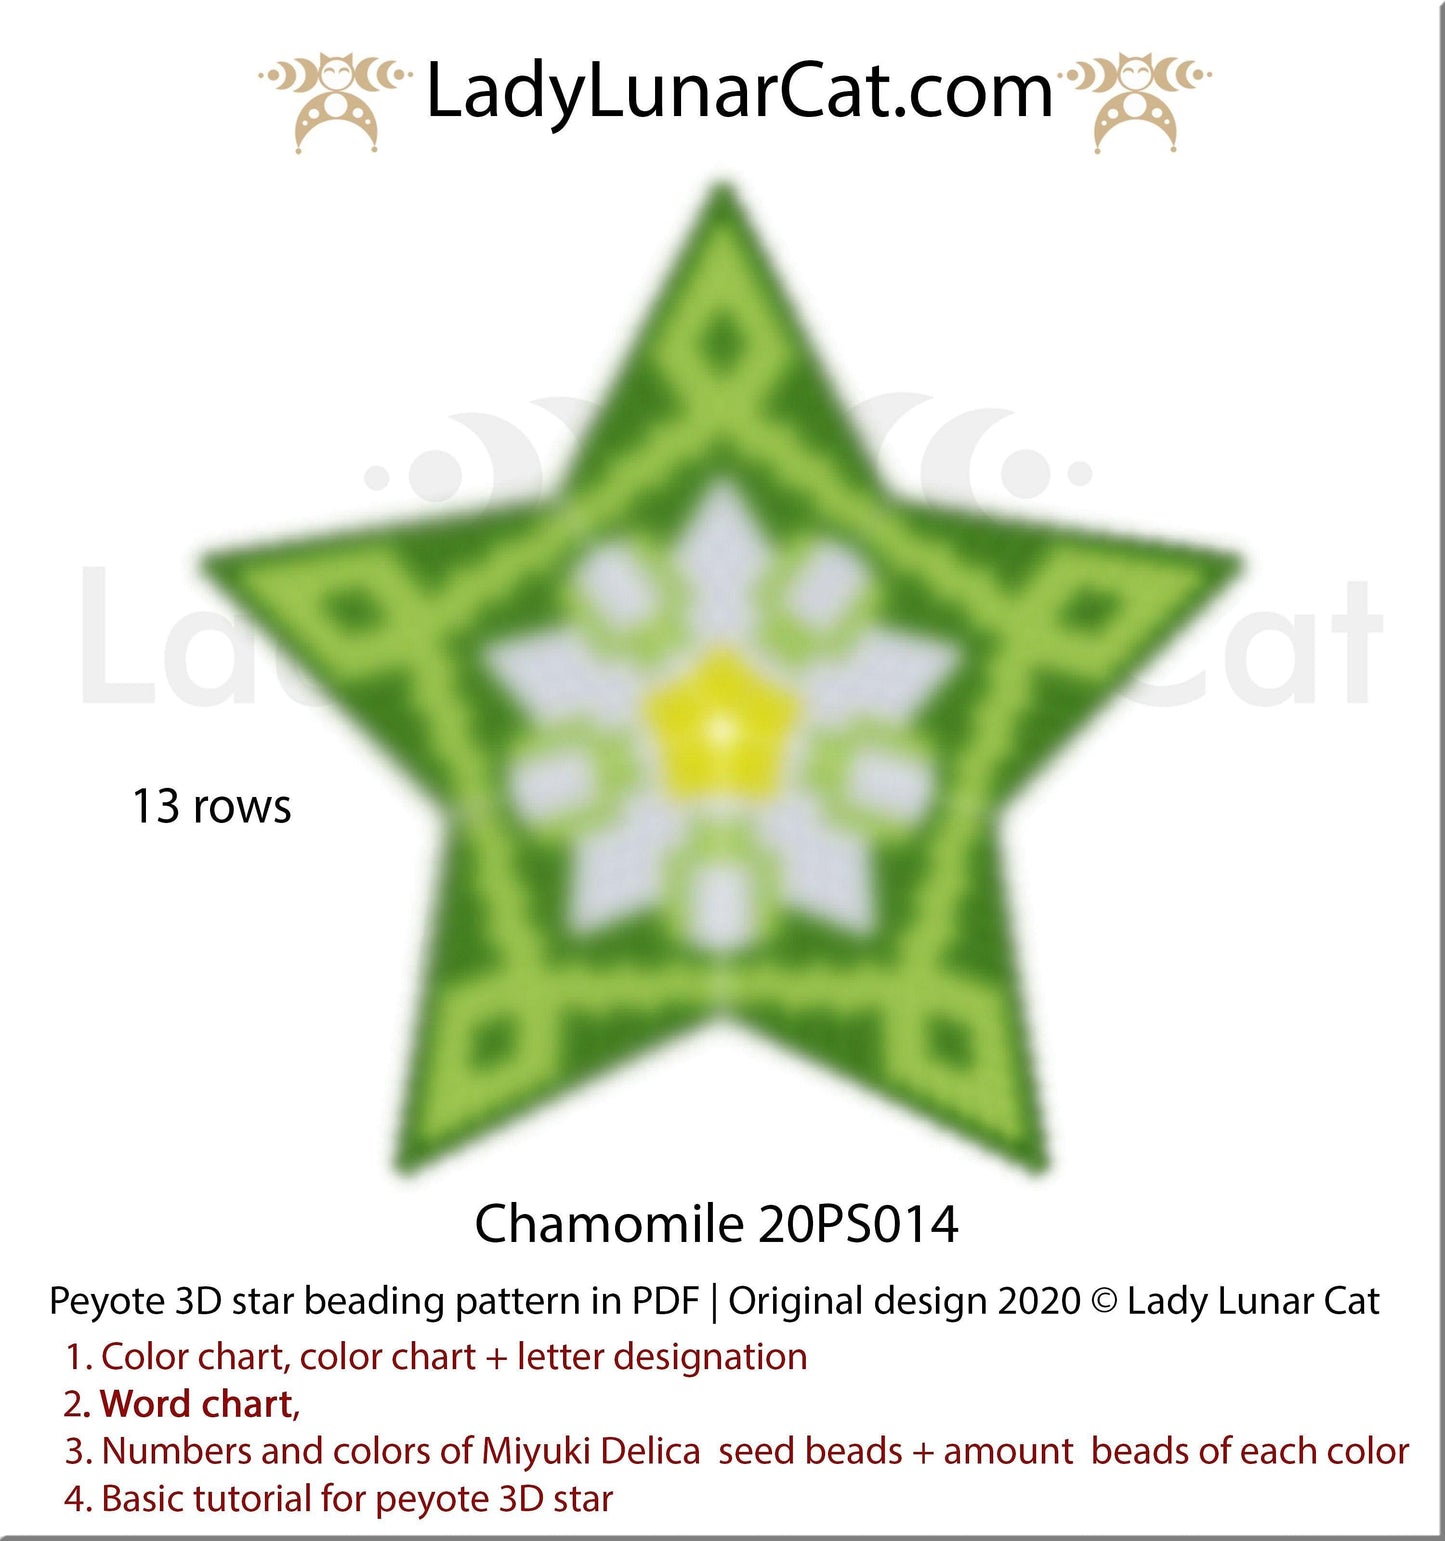 Beaded star pattern for beadweaving Chamomile flower 20PS014 LadyLunarCat